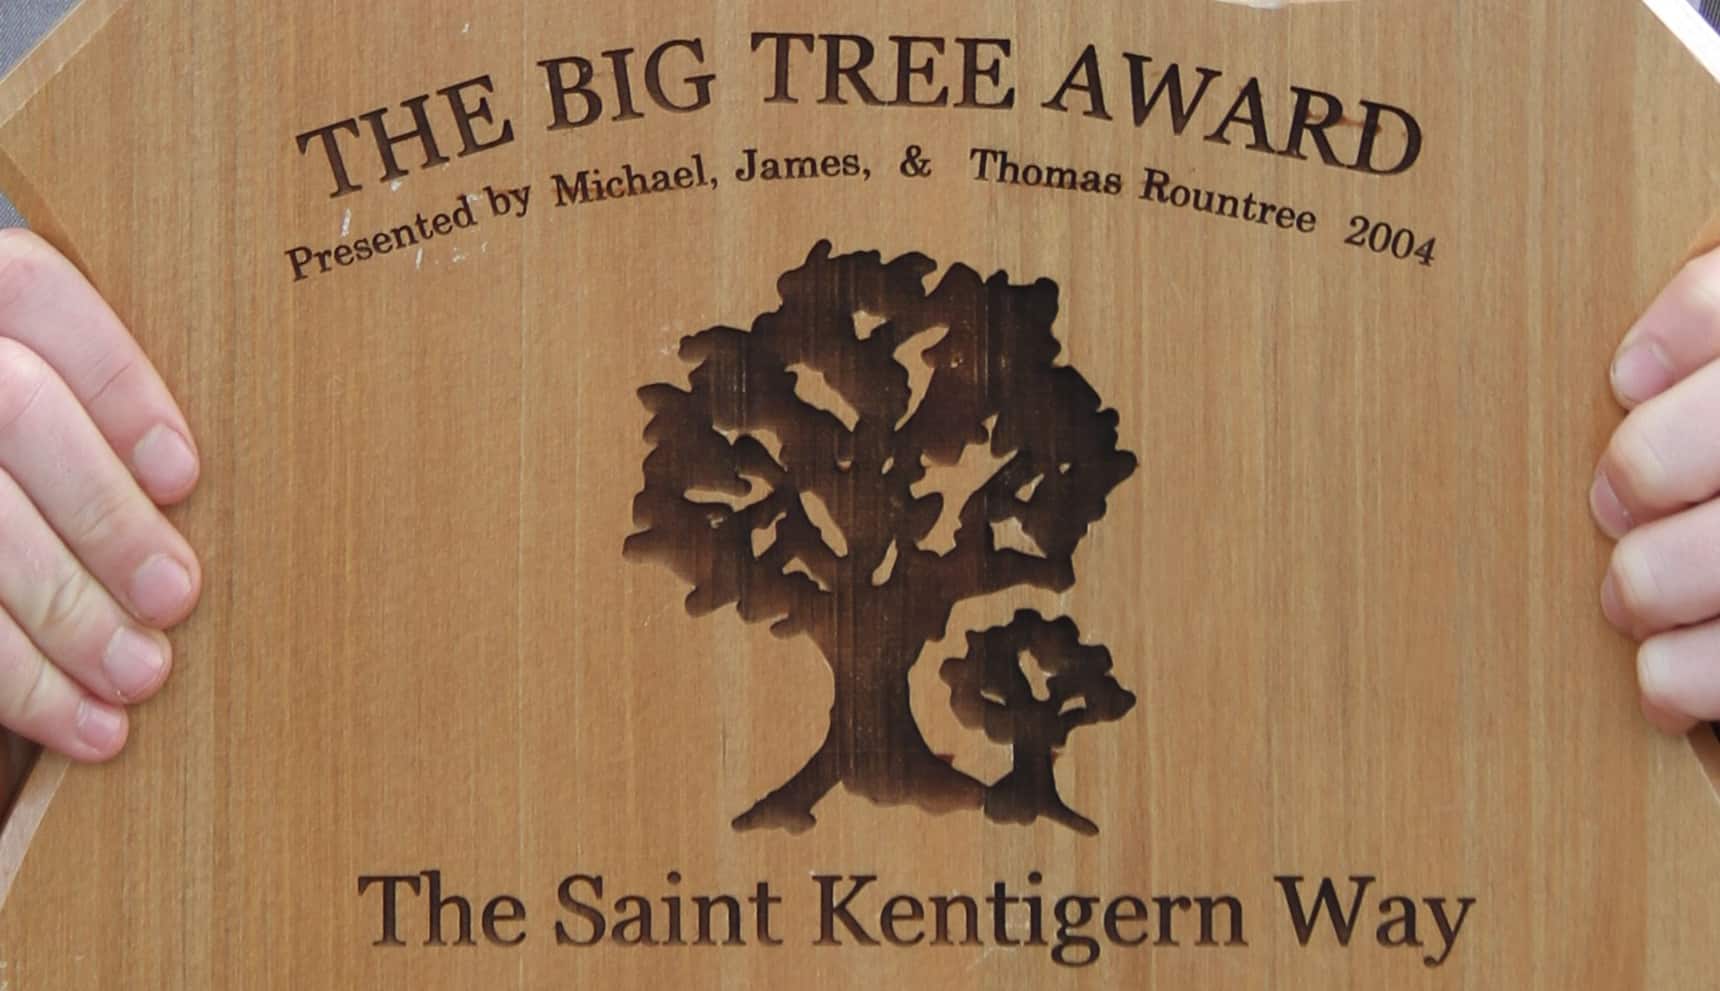 Big tree award 2022-2